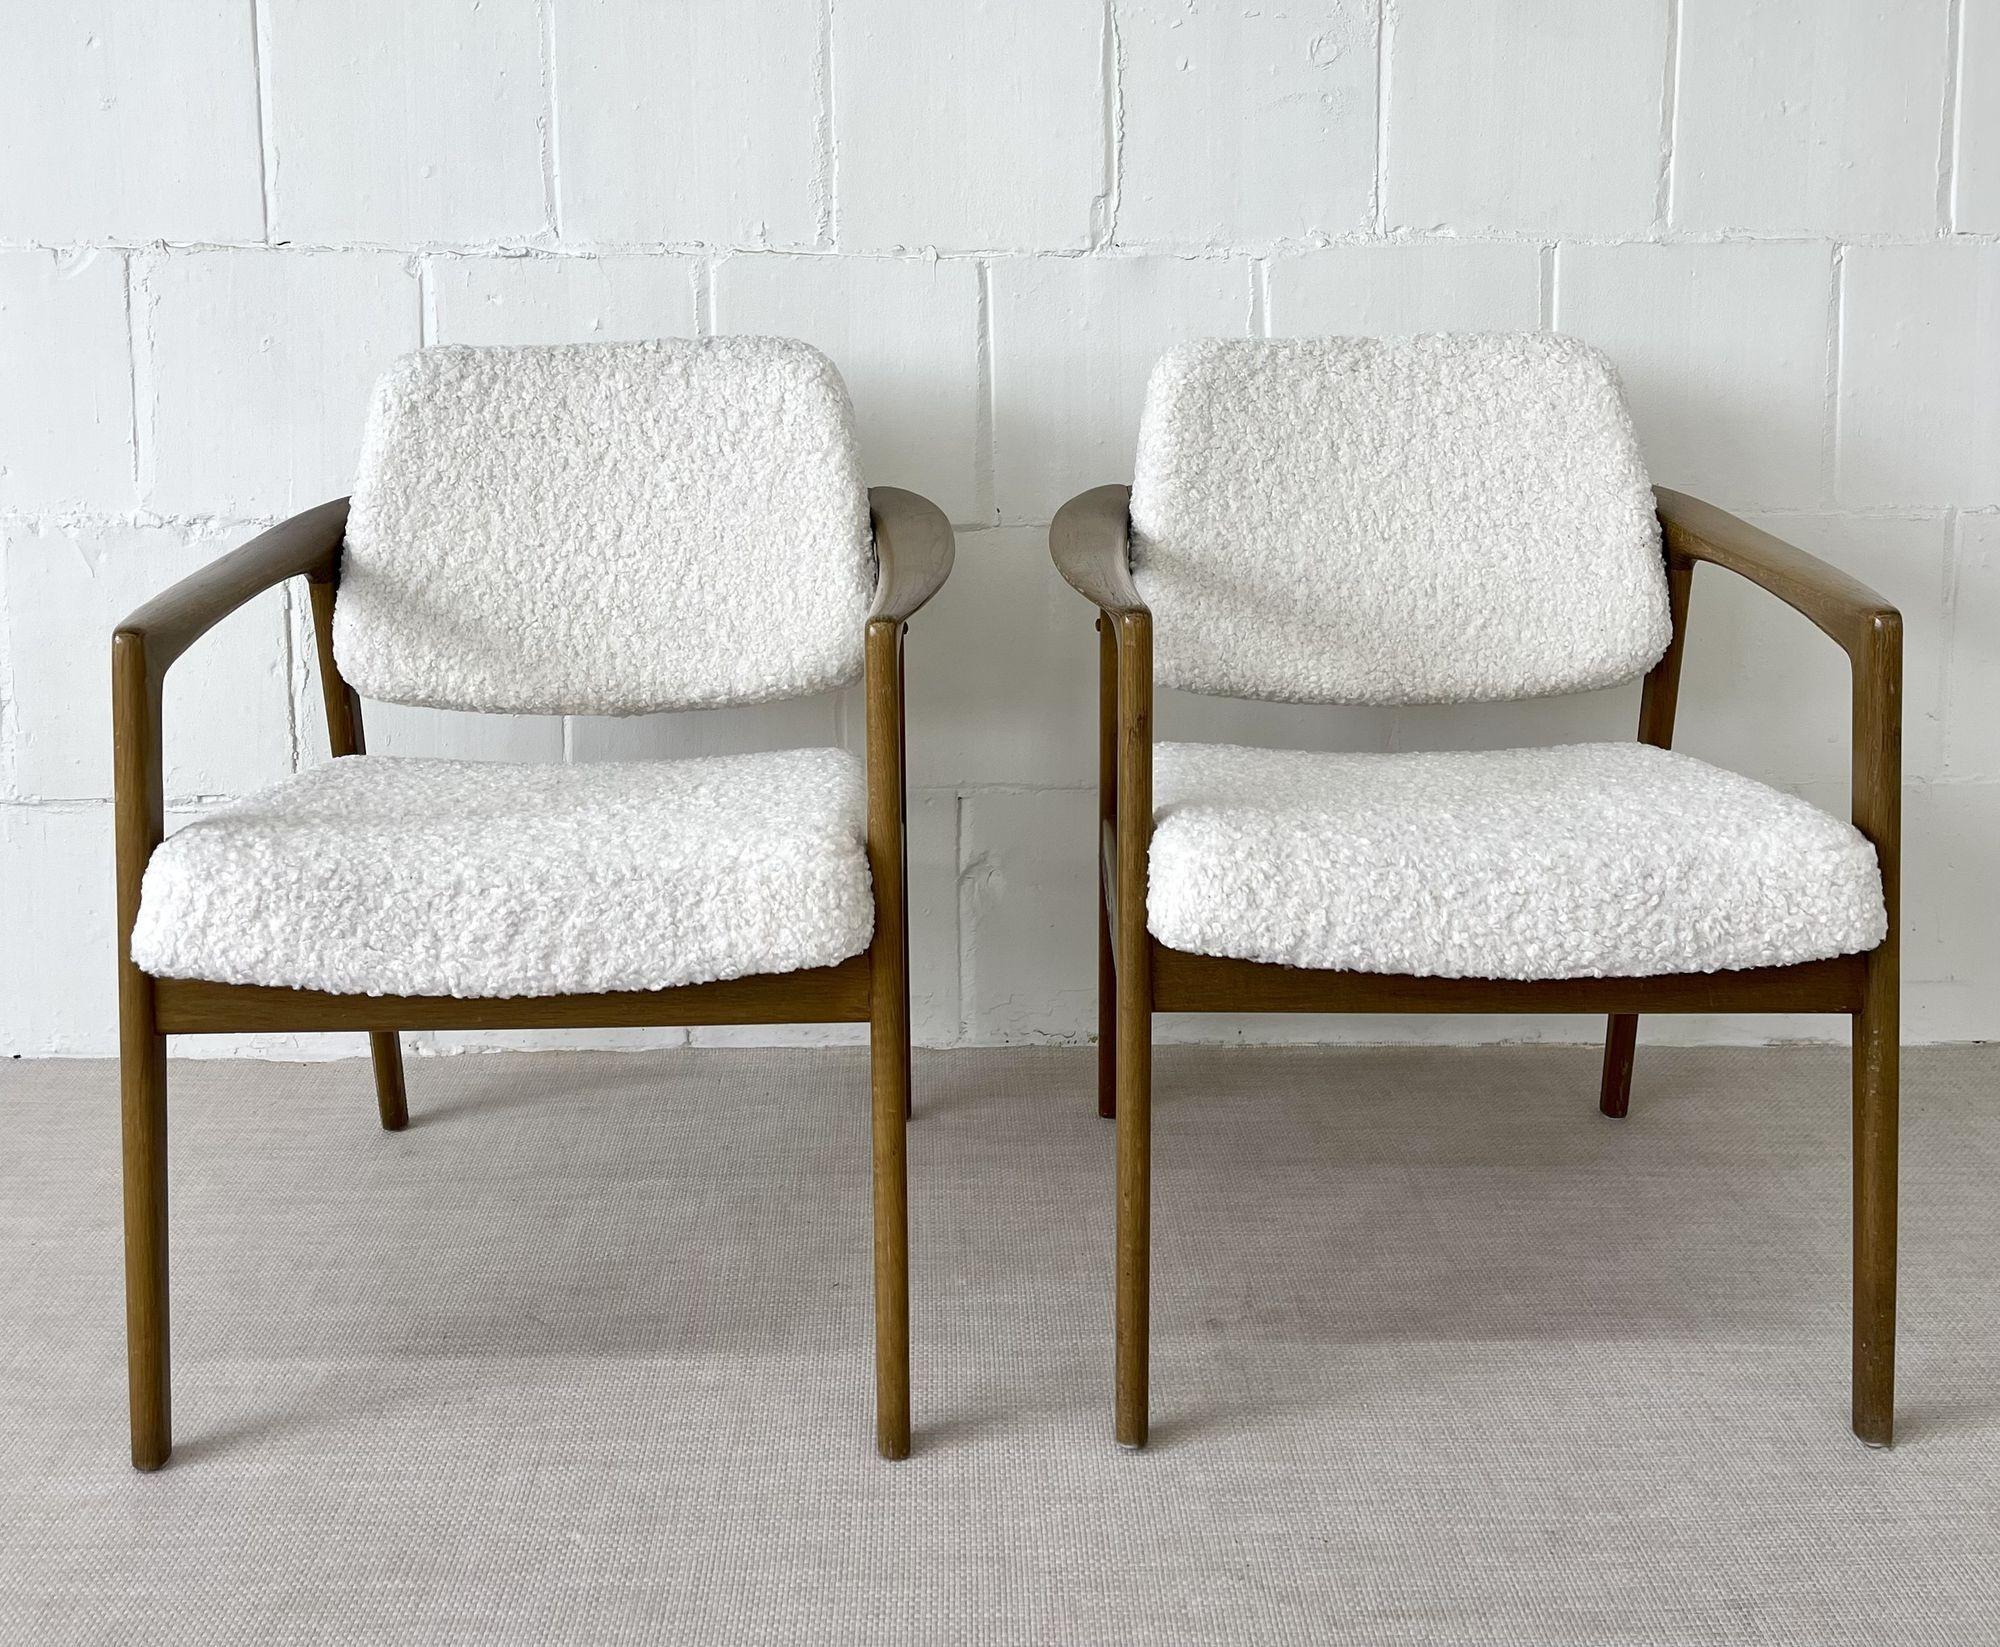 Swedish Designer, Mid-Century Accent Chairs, White Sheepskin, Oak, Sweden, 1960s For Sale 1